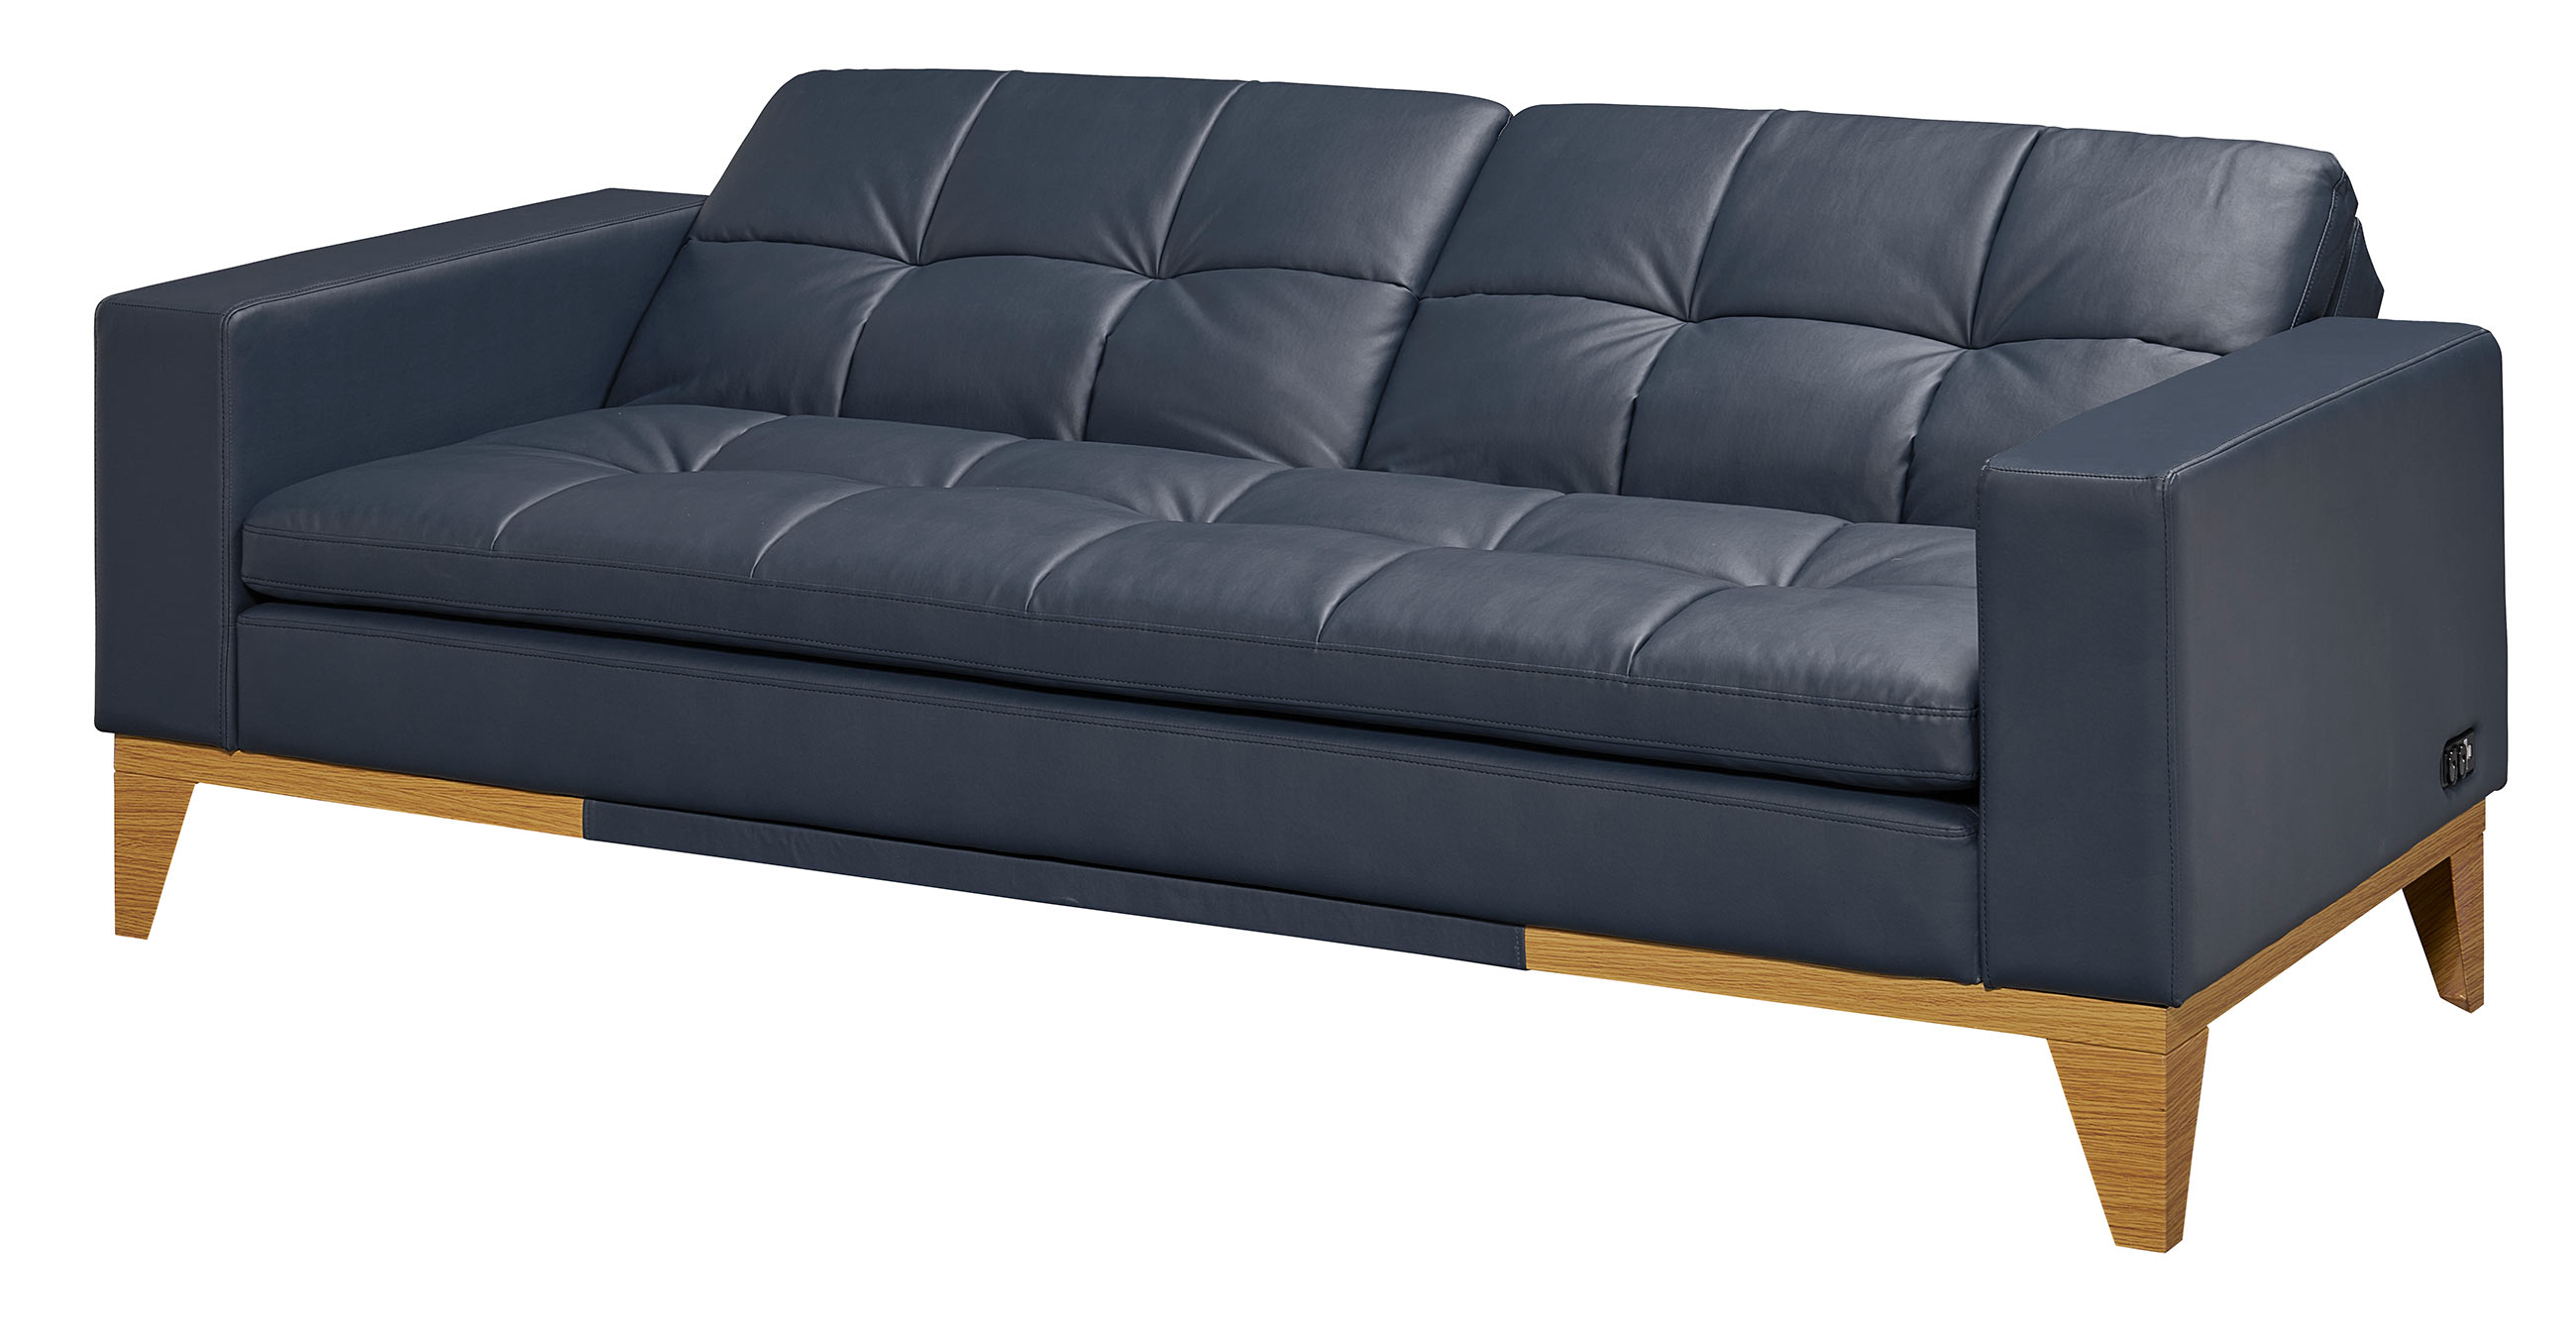 Westridge Convertible Sofa Navy by Serta Lifestyle